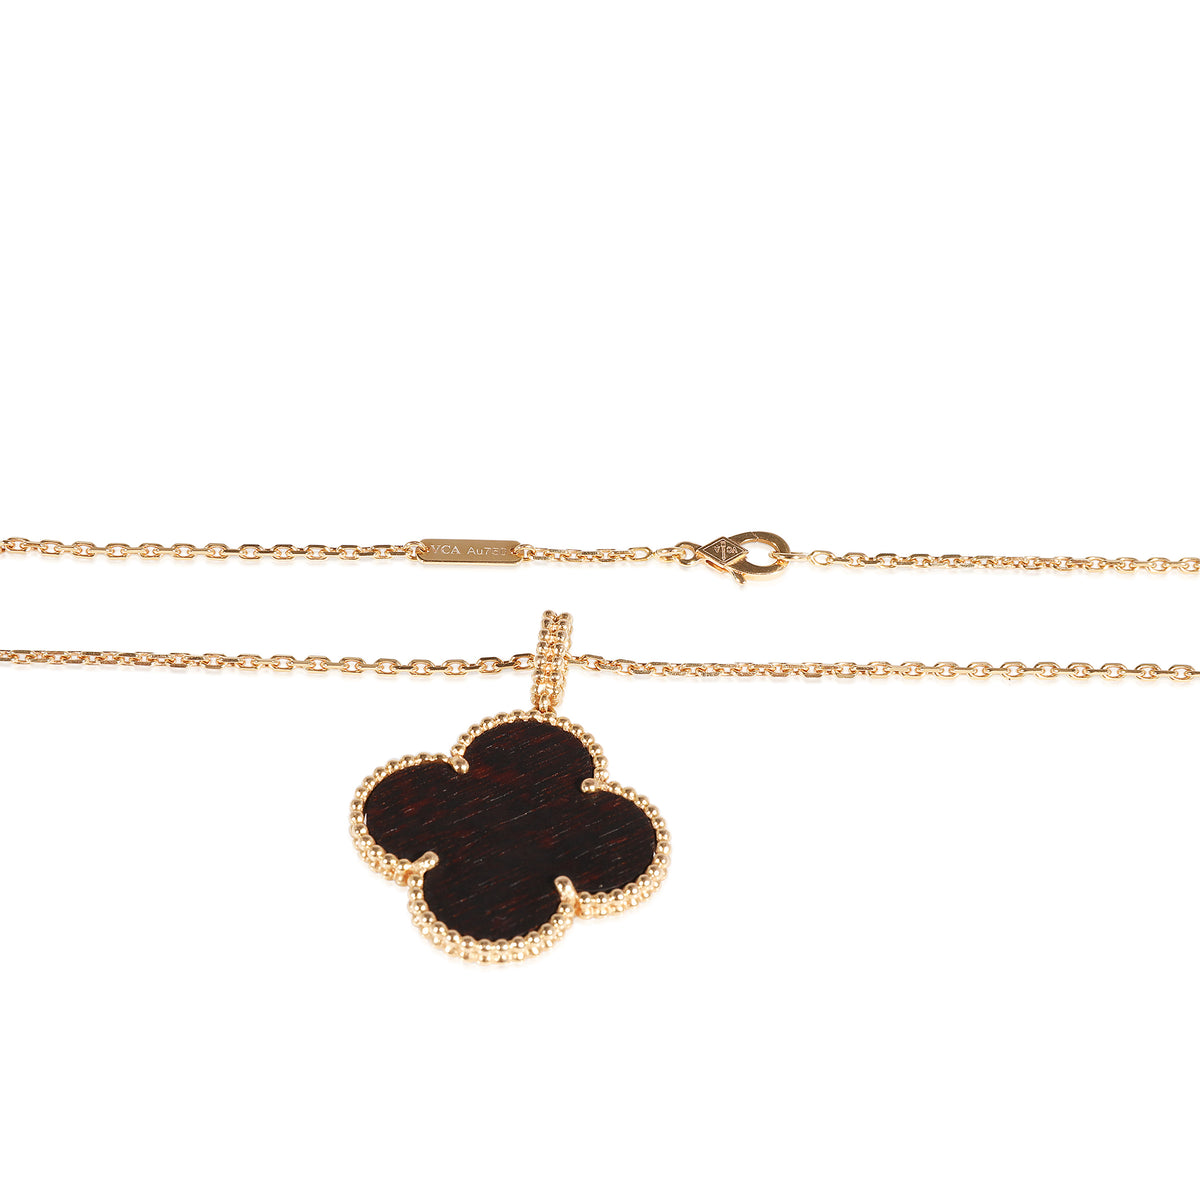 Alhambra - Jewelry - Van Cleef & Arpels | Van cleef and arpels jewelry,  Alhambra pendant, Van cleef necklace